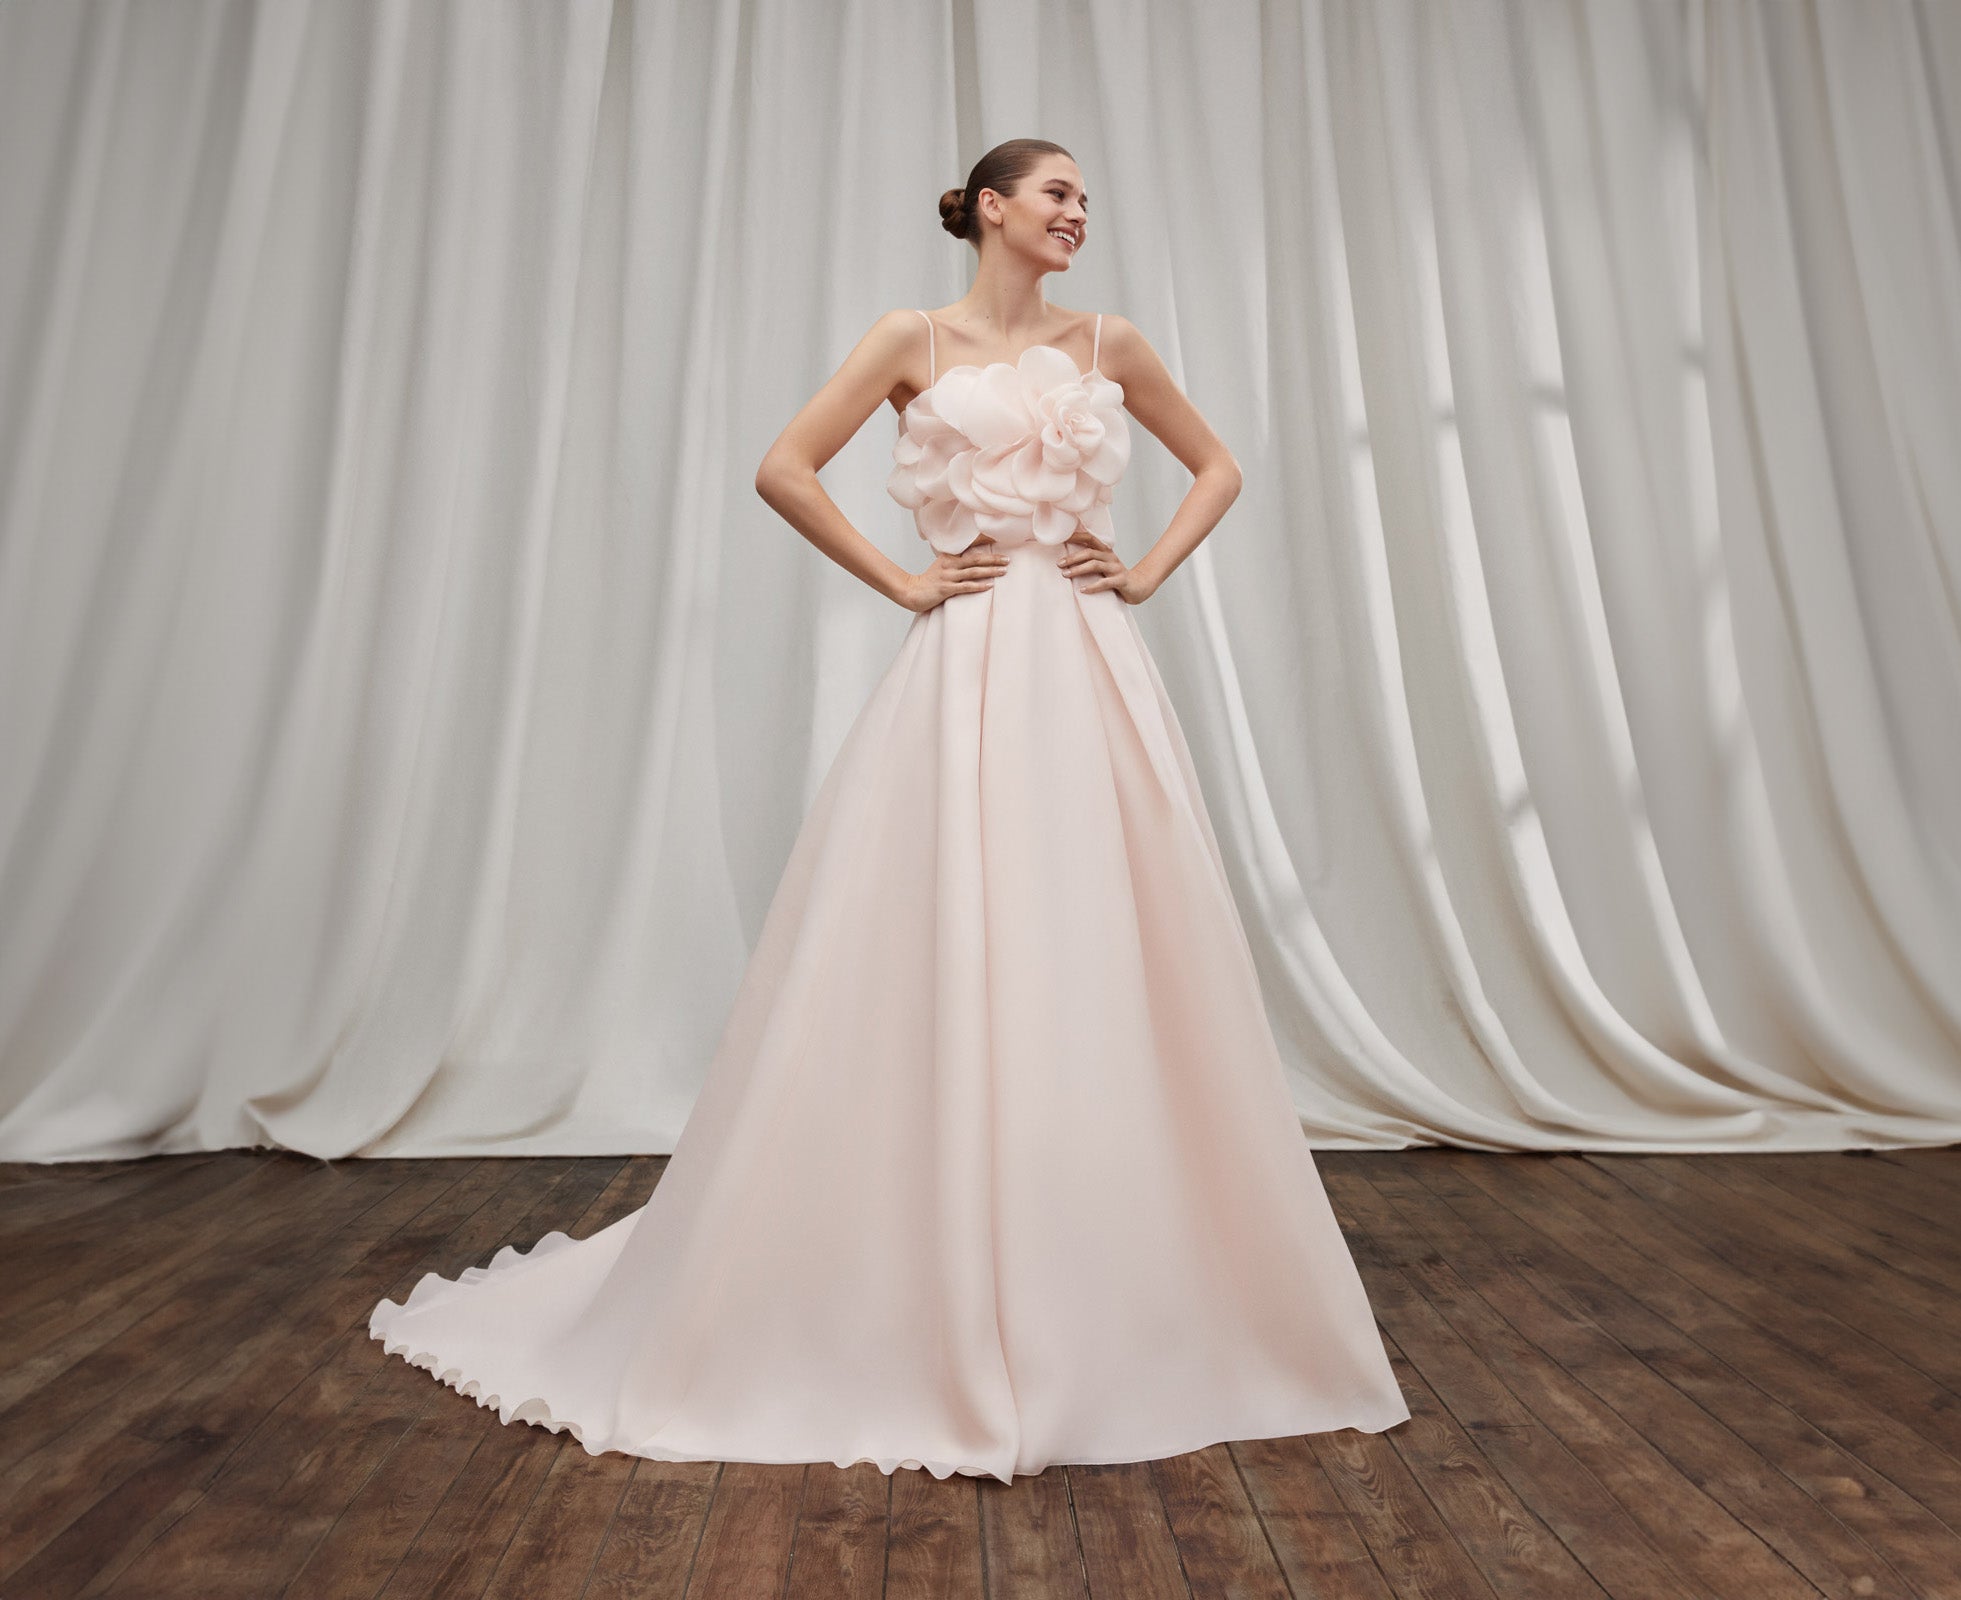 Regency ball gown | DressArtMystery – Dress Art Mystery